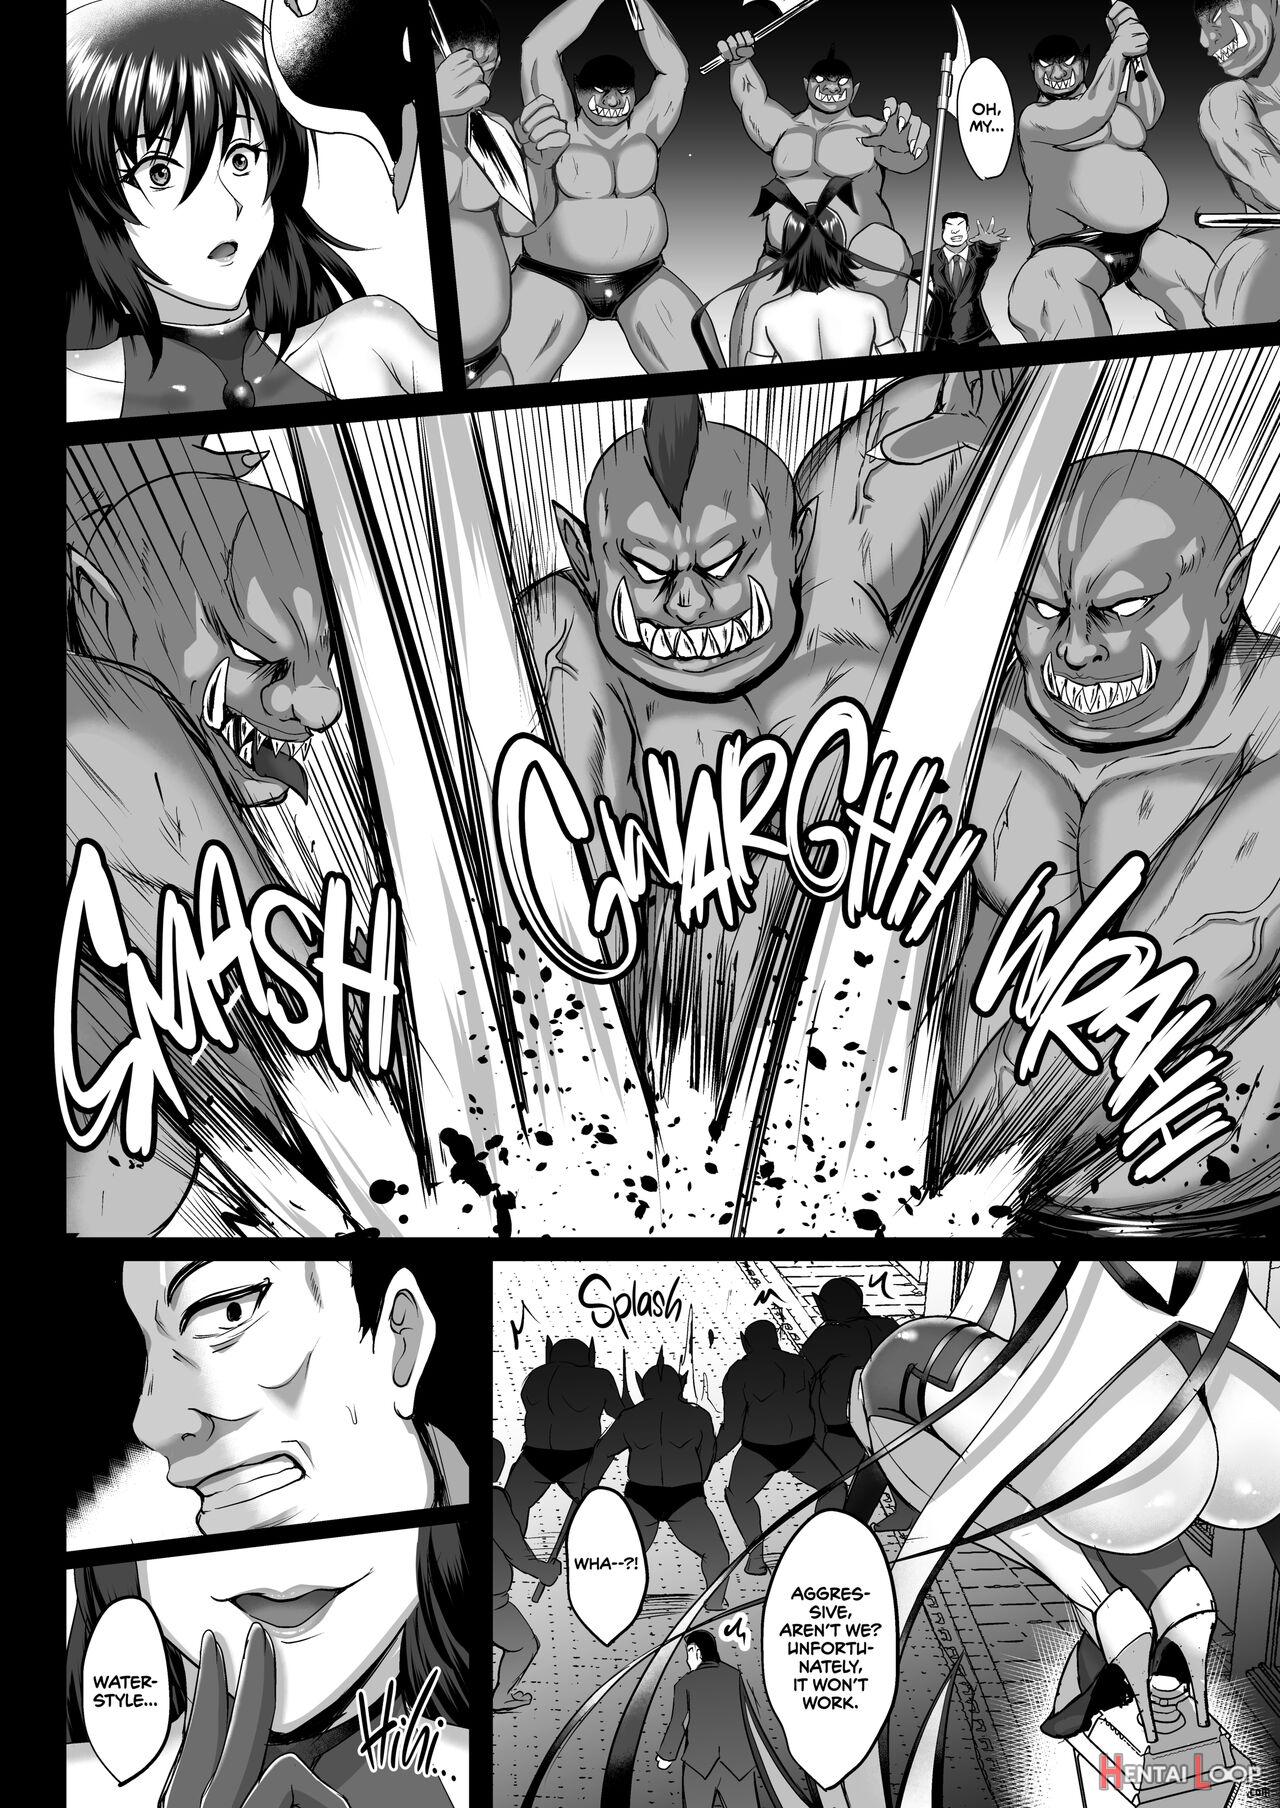 Shiranui Getting Knocked Up) page 3